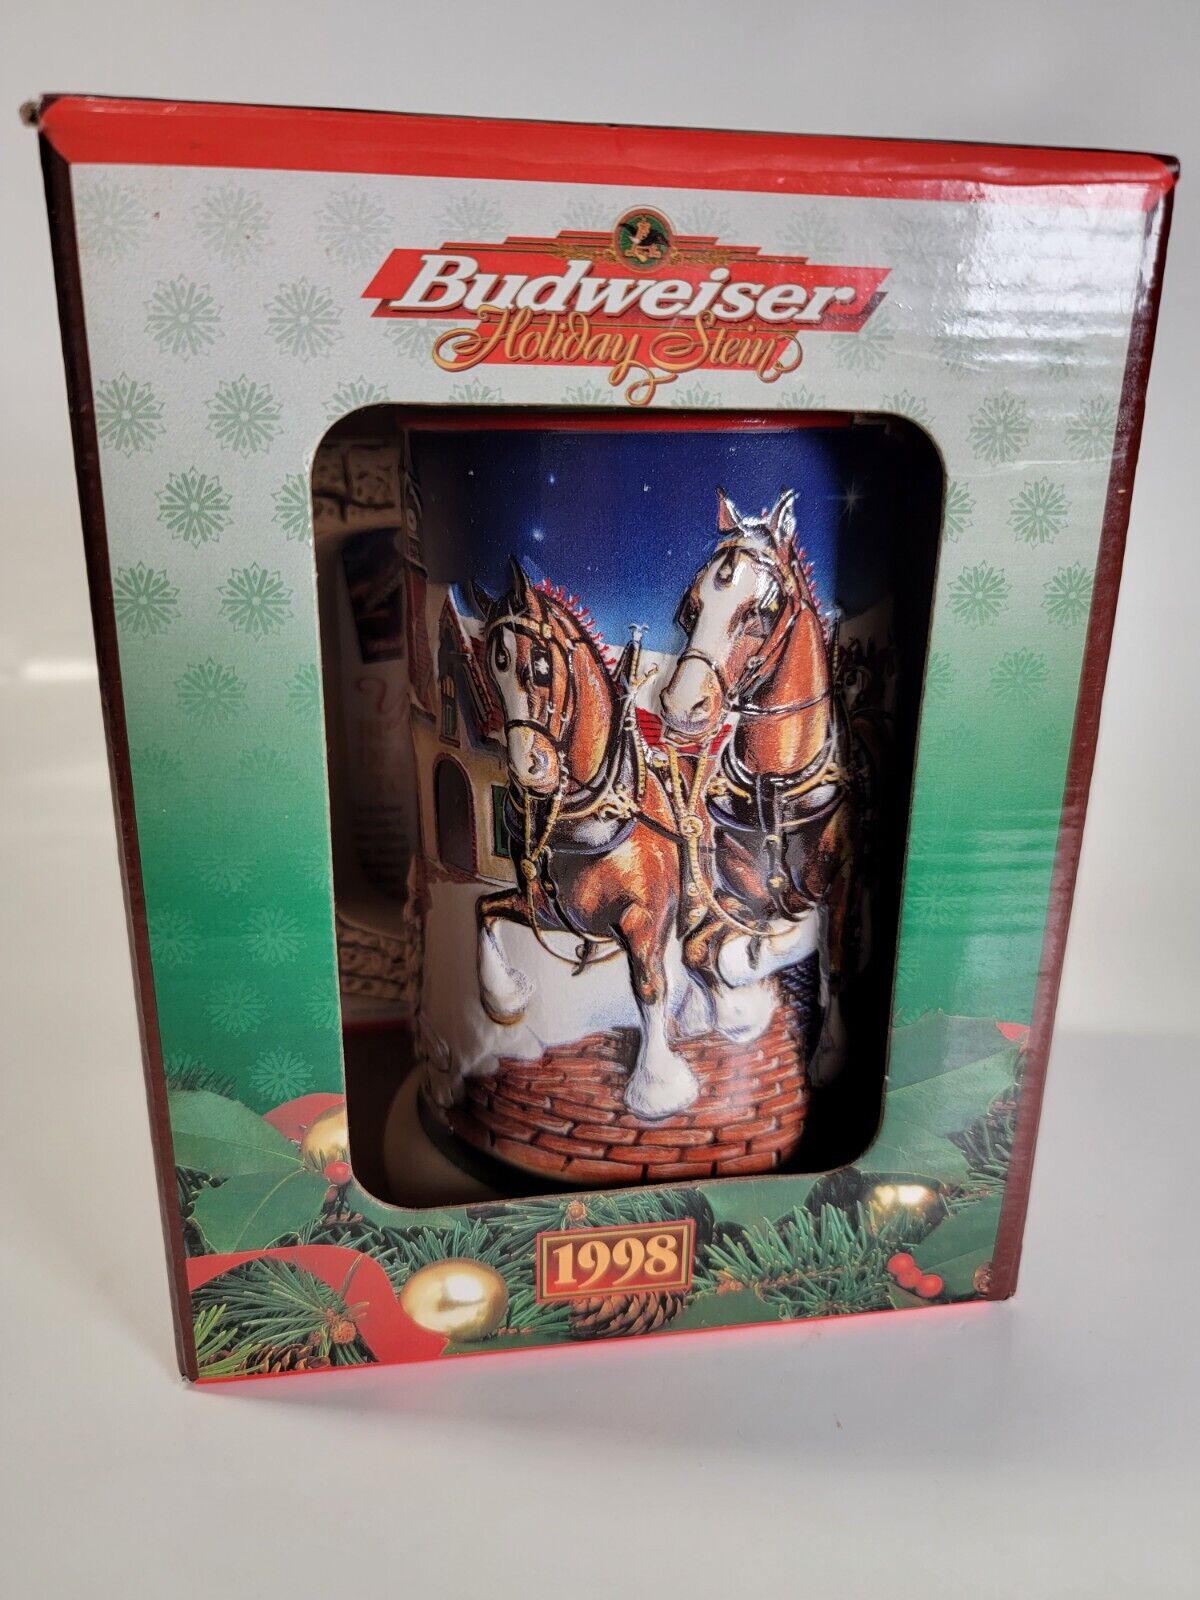 Vintage 1998 Budweiser Holiday Stein Collector's Series